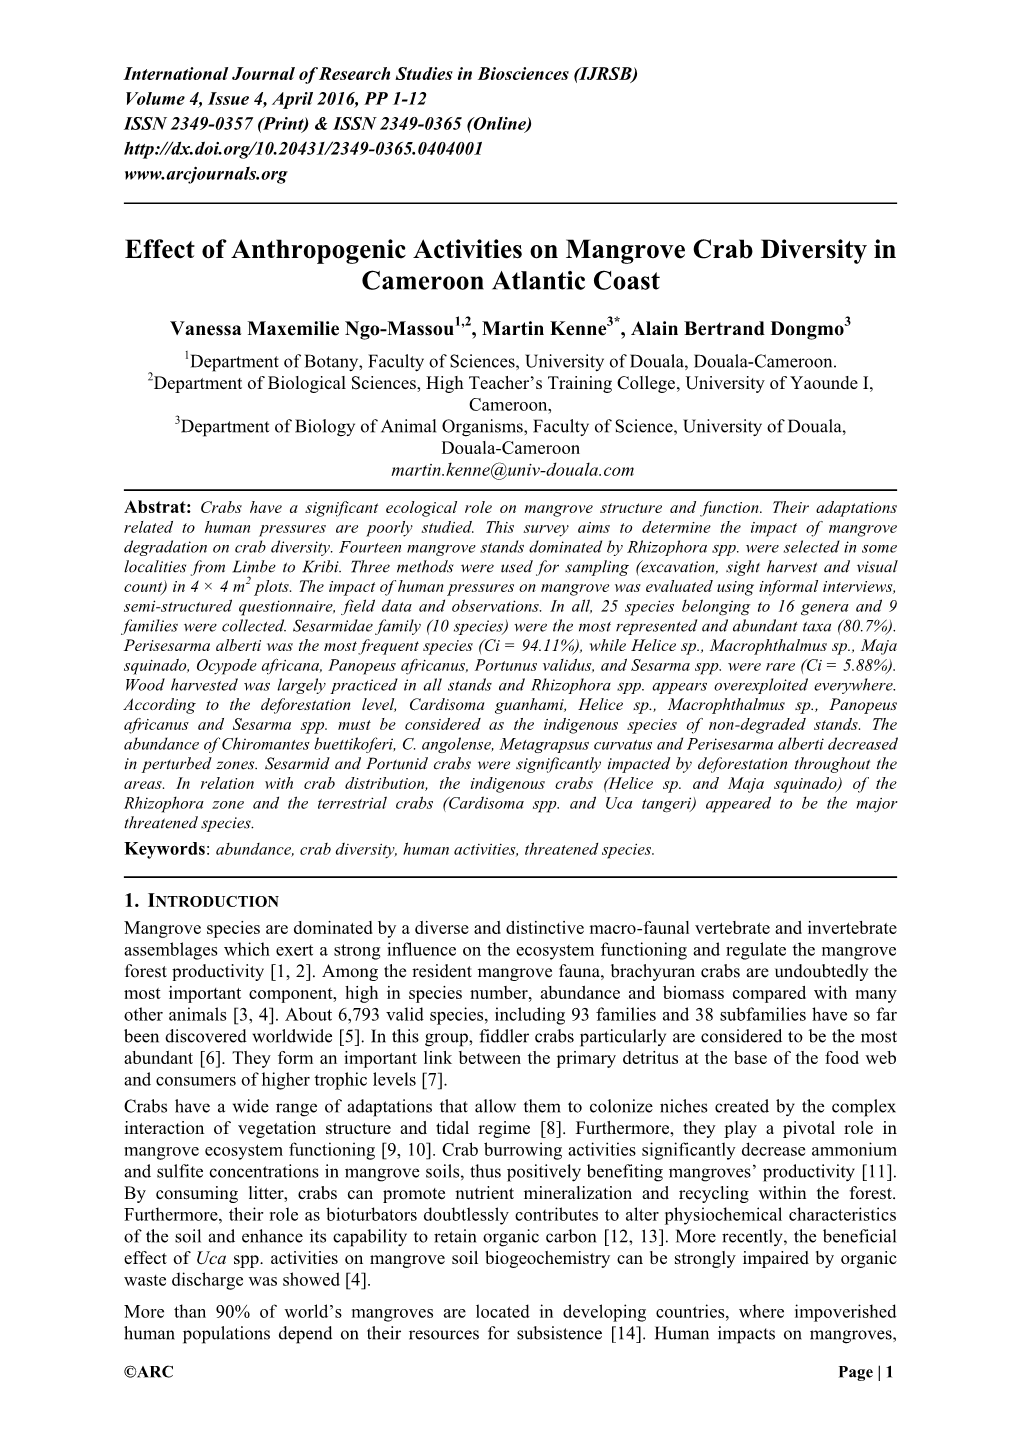 Effect of Anthropogenic Activities on Mangrove Crab Diversity in Cameroon Atlantic Coast